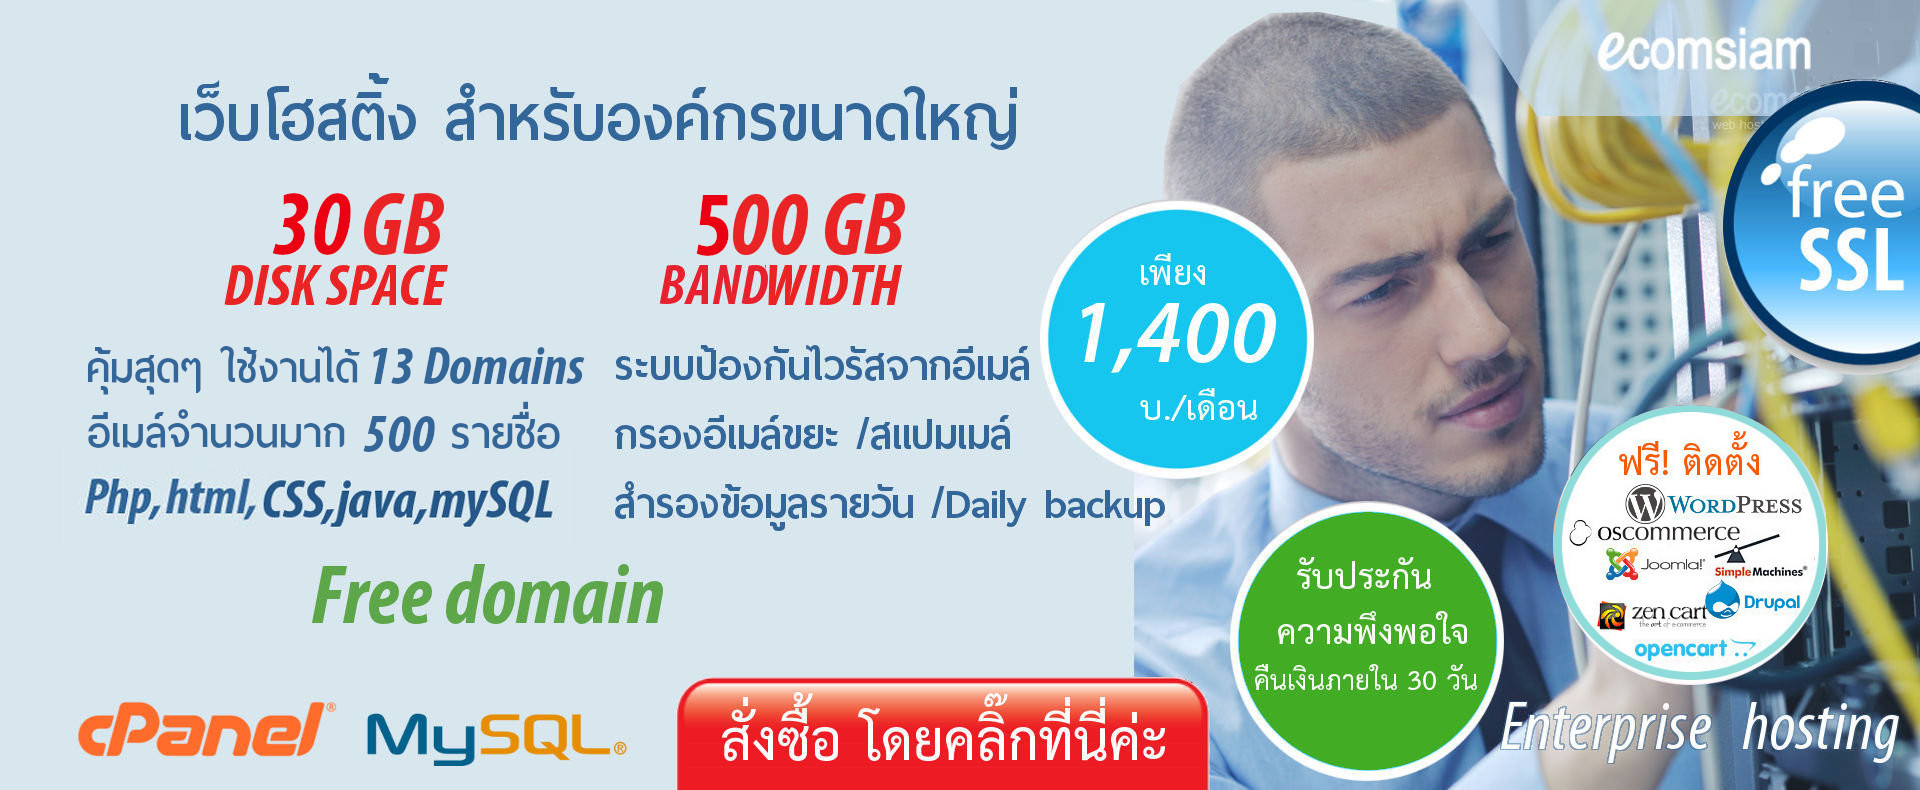 web hosting thai แนะนำ Enterprise web hosting thailand เว็บโฮสต์ติ้งสำหรับองค์กรขนาดใหญ่ Enterprise hosting : เพื่อการใช้งานเว็บไซต์และอีเมล์จำนวนมาก ราคาเพียง 1,400 บ./เดือน เว็บโฮสติ้งไทย ฟรี โดเมน ฟรี SSL ฟรีติดตั้ง แนะนำเว็บโฮสติ้ง บริการลูกค้า  Support ดูแลดี โดย webhostthai.com - enterprise web hosting thailand free domain